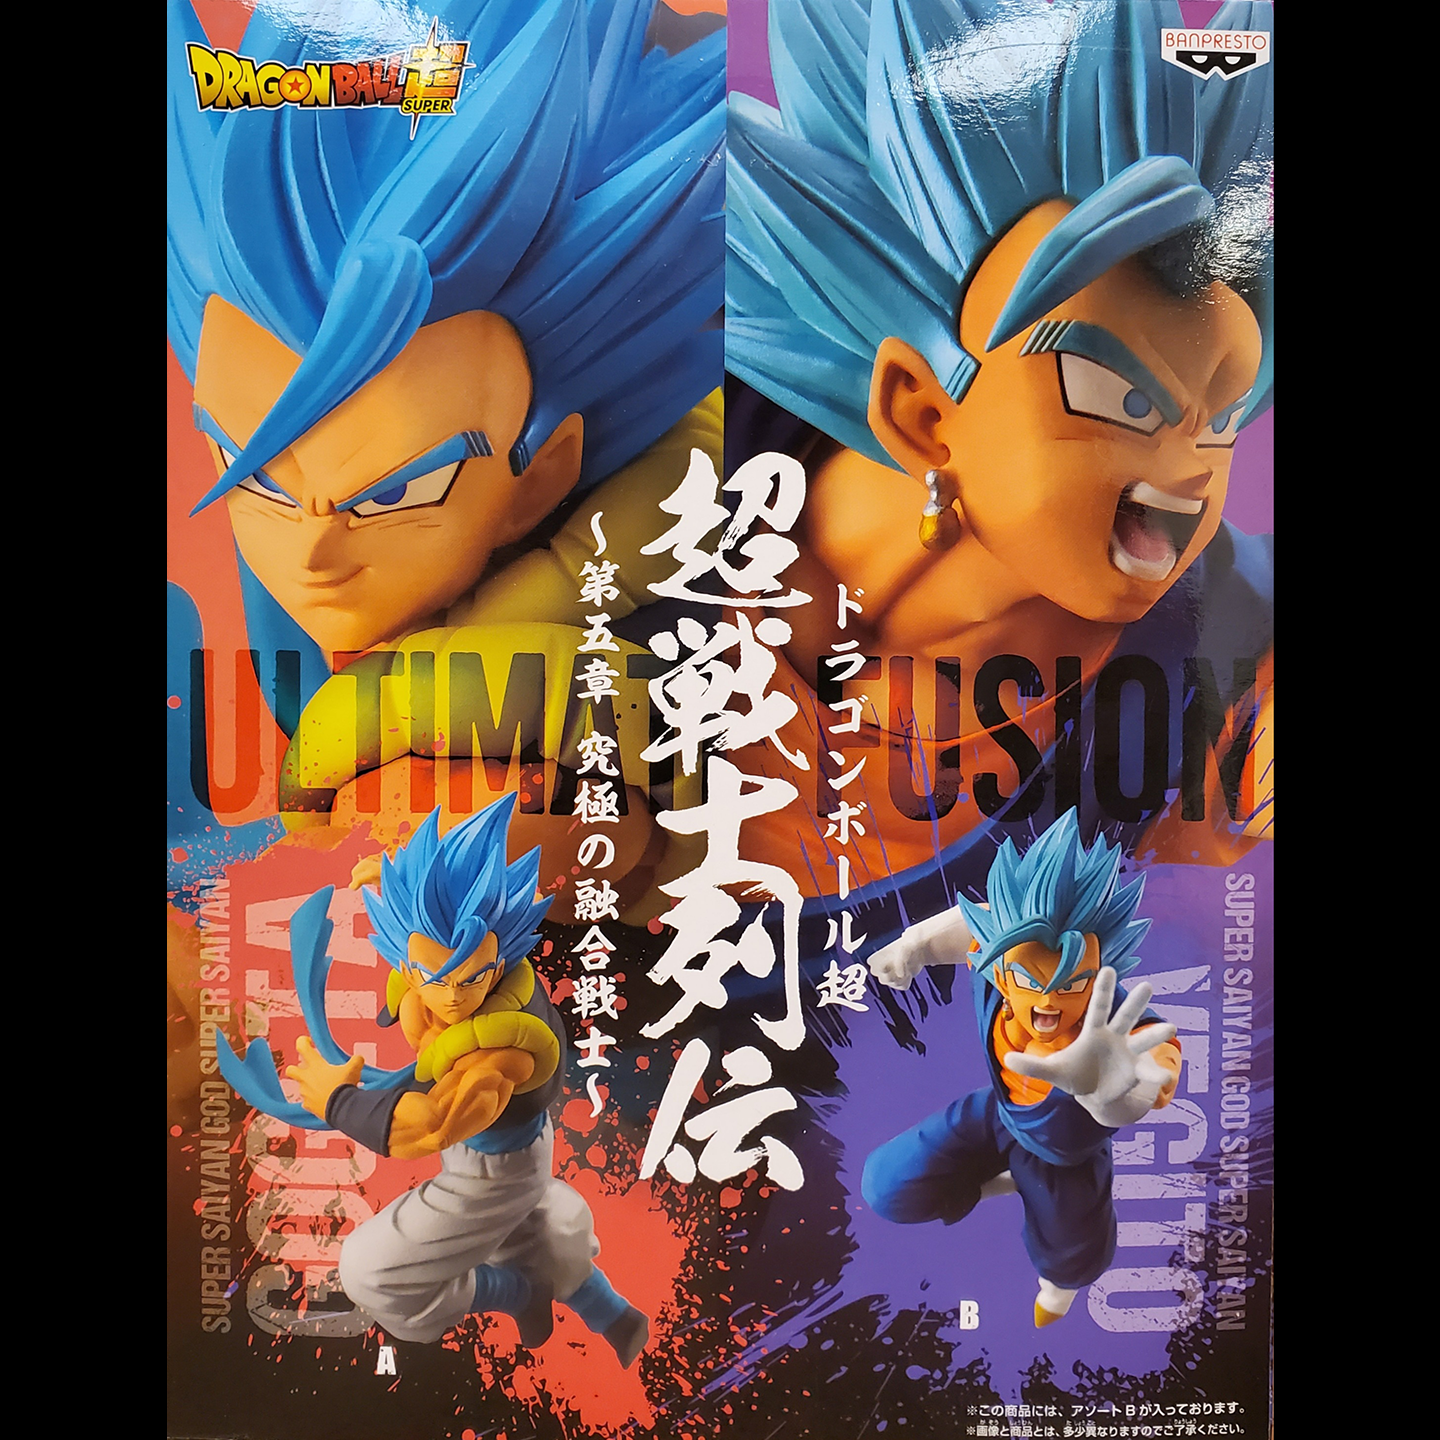 Vegetto Super Sayajin Chosenshiretsuden - Dragon Ball Super - Banpresto